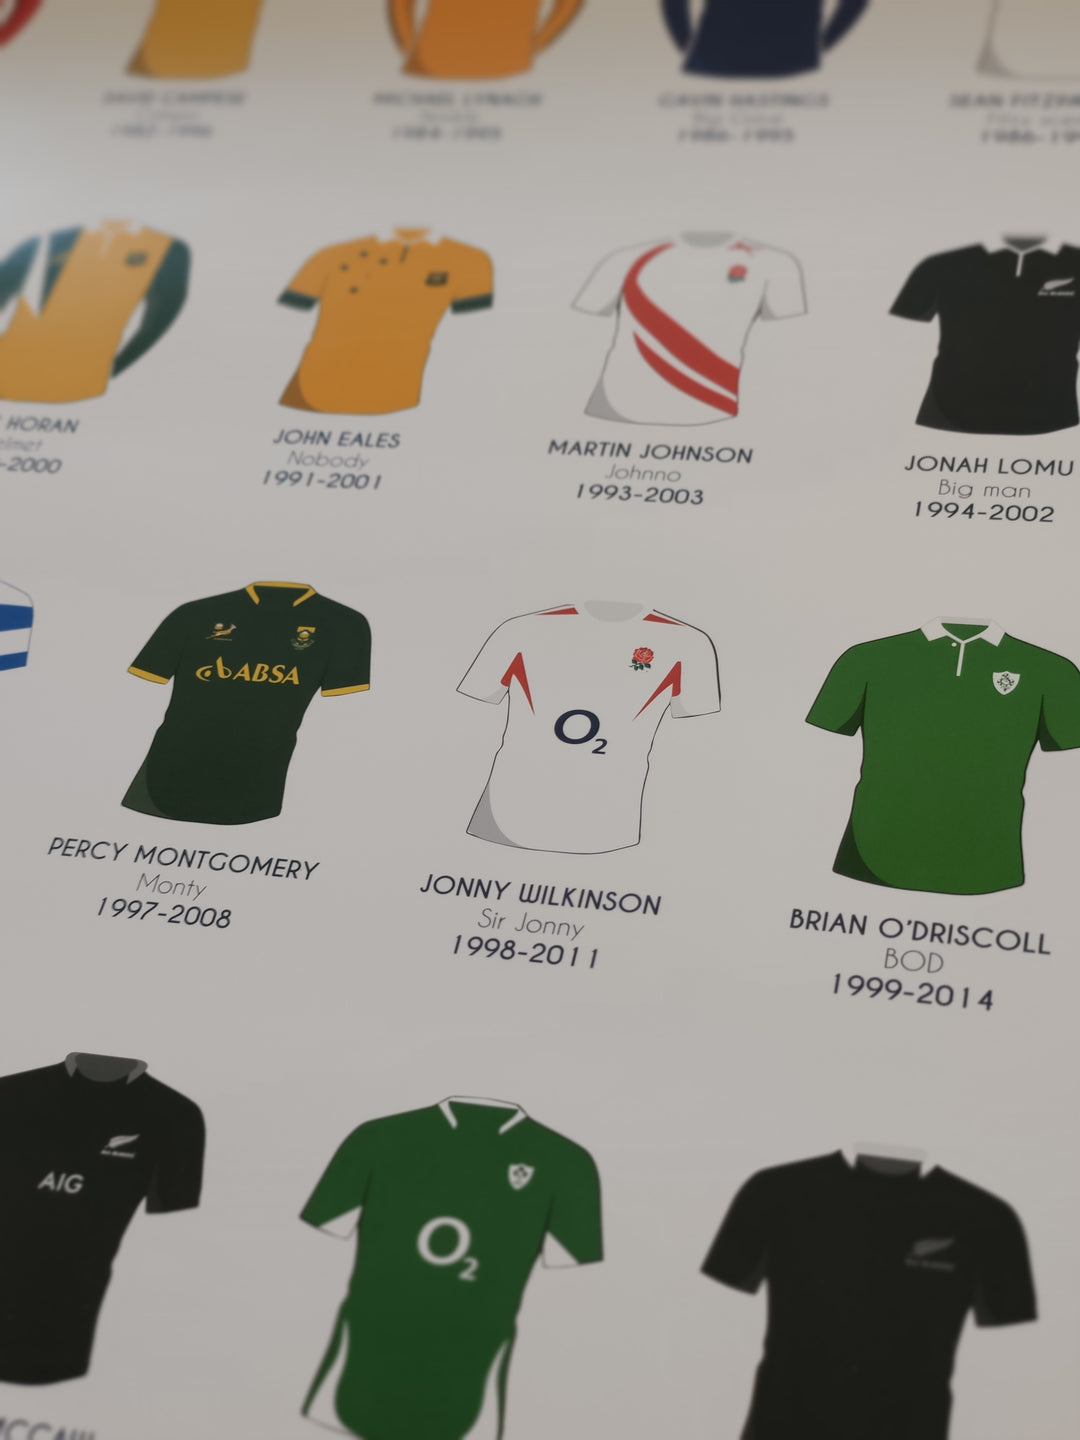 Affiche légendes du rugby mondial I Meilleurs joueurs de rugby I Affiche rugby